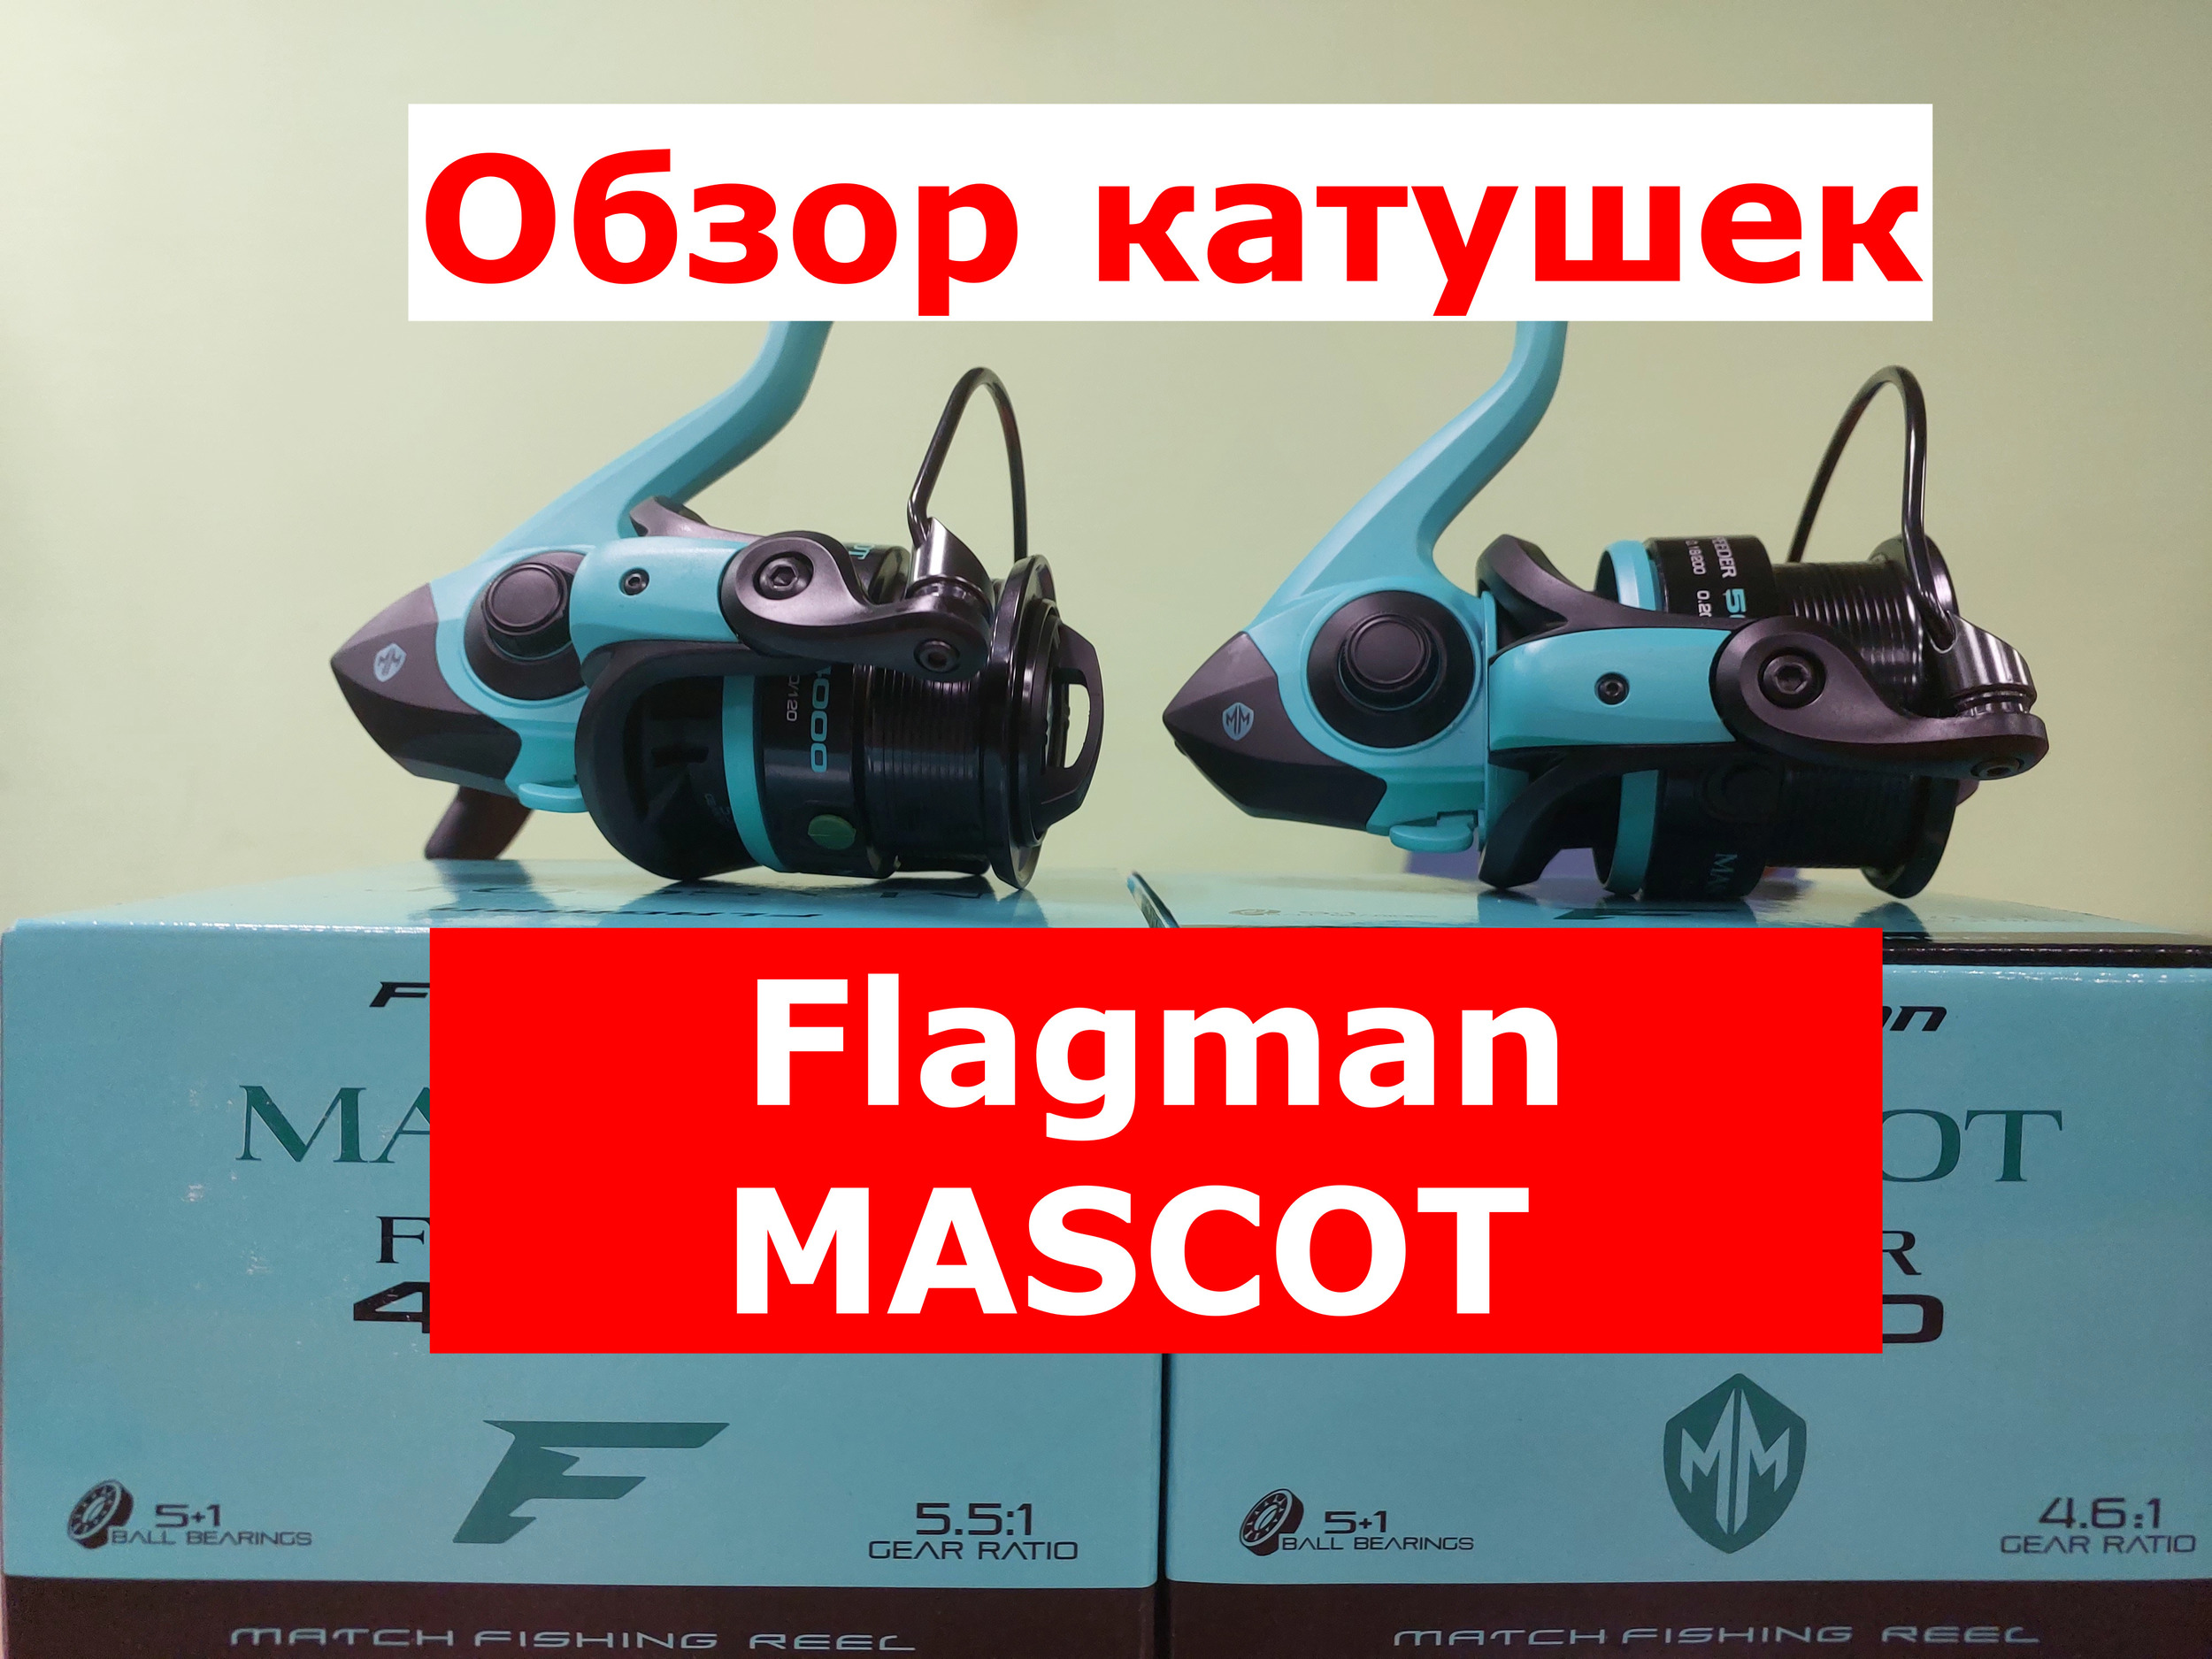 Катушка Flagman MASCOT | ОБЗОР катушек Флагман МАСКОТ